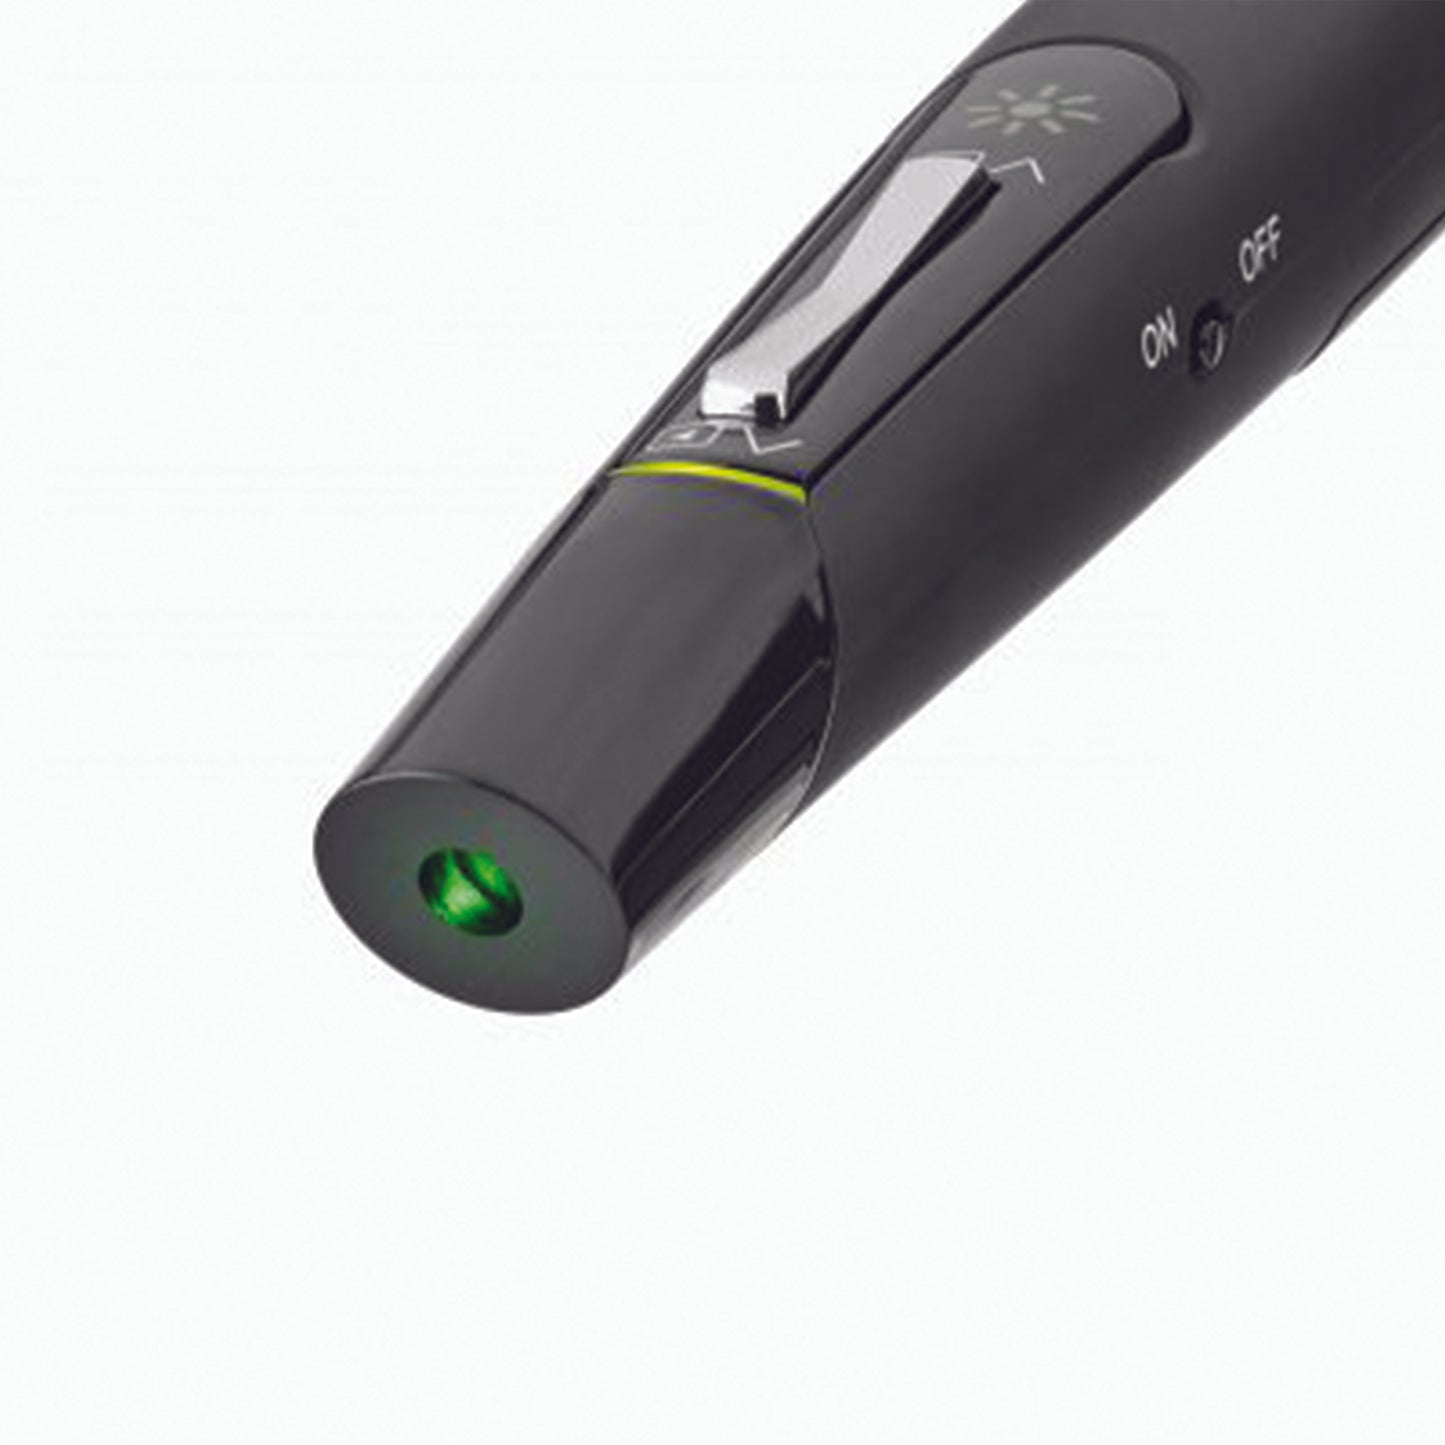 Prolink Wireless Presenter with Green Laser PWP106G